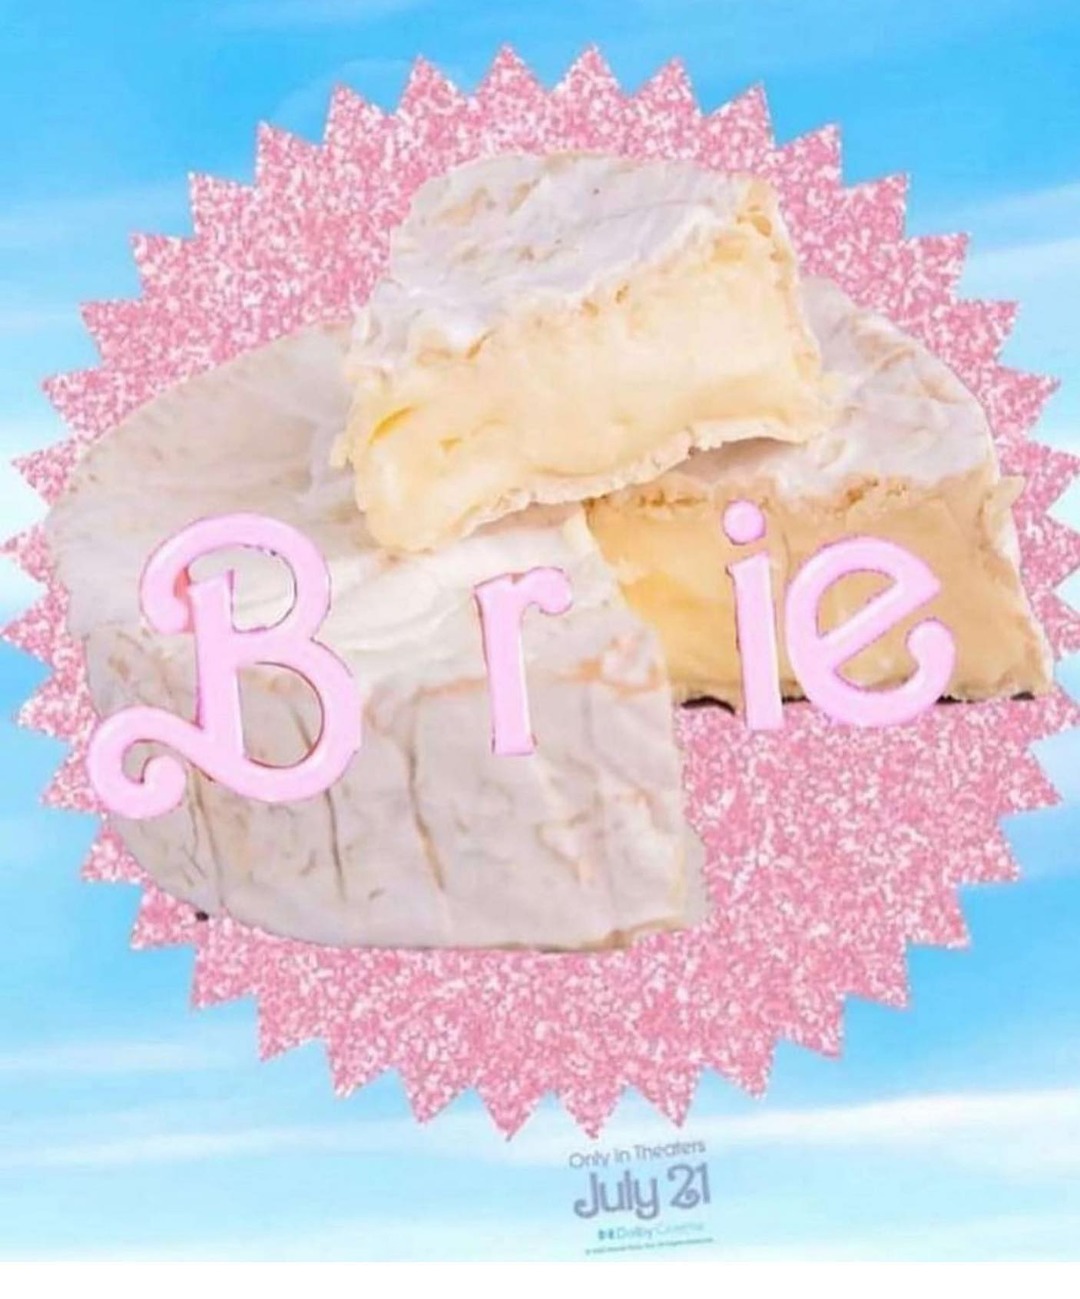 Mm Brie - meme